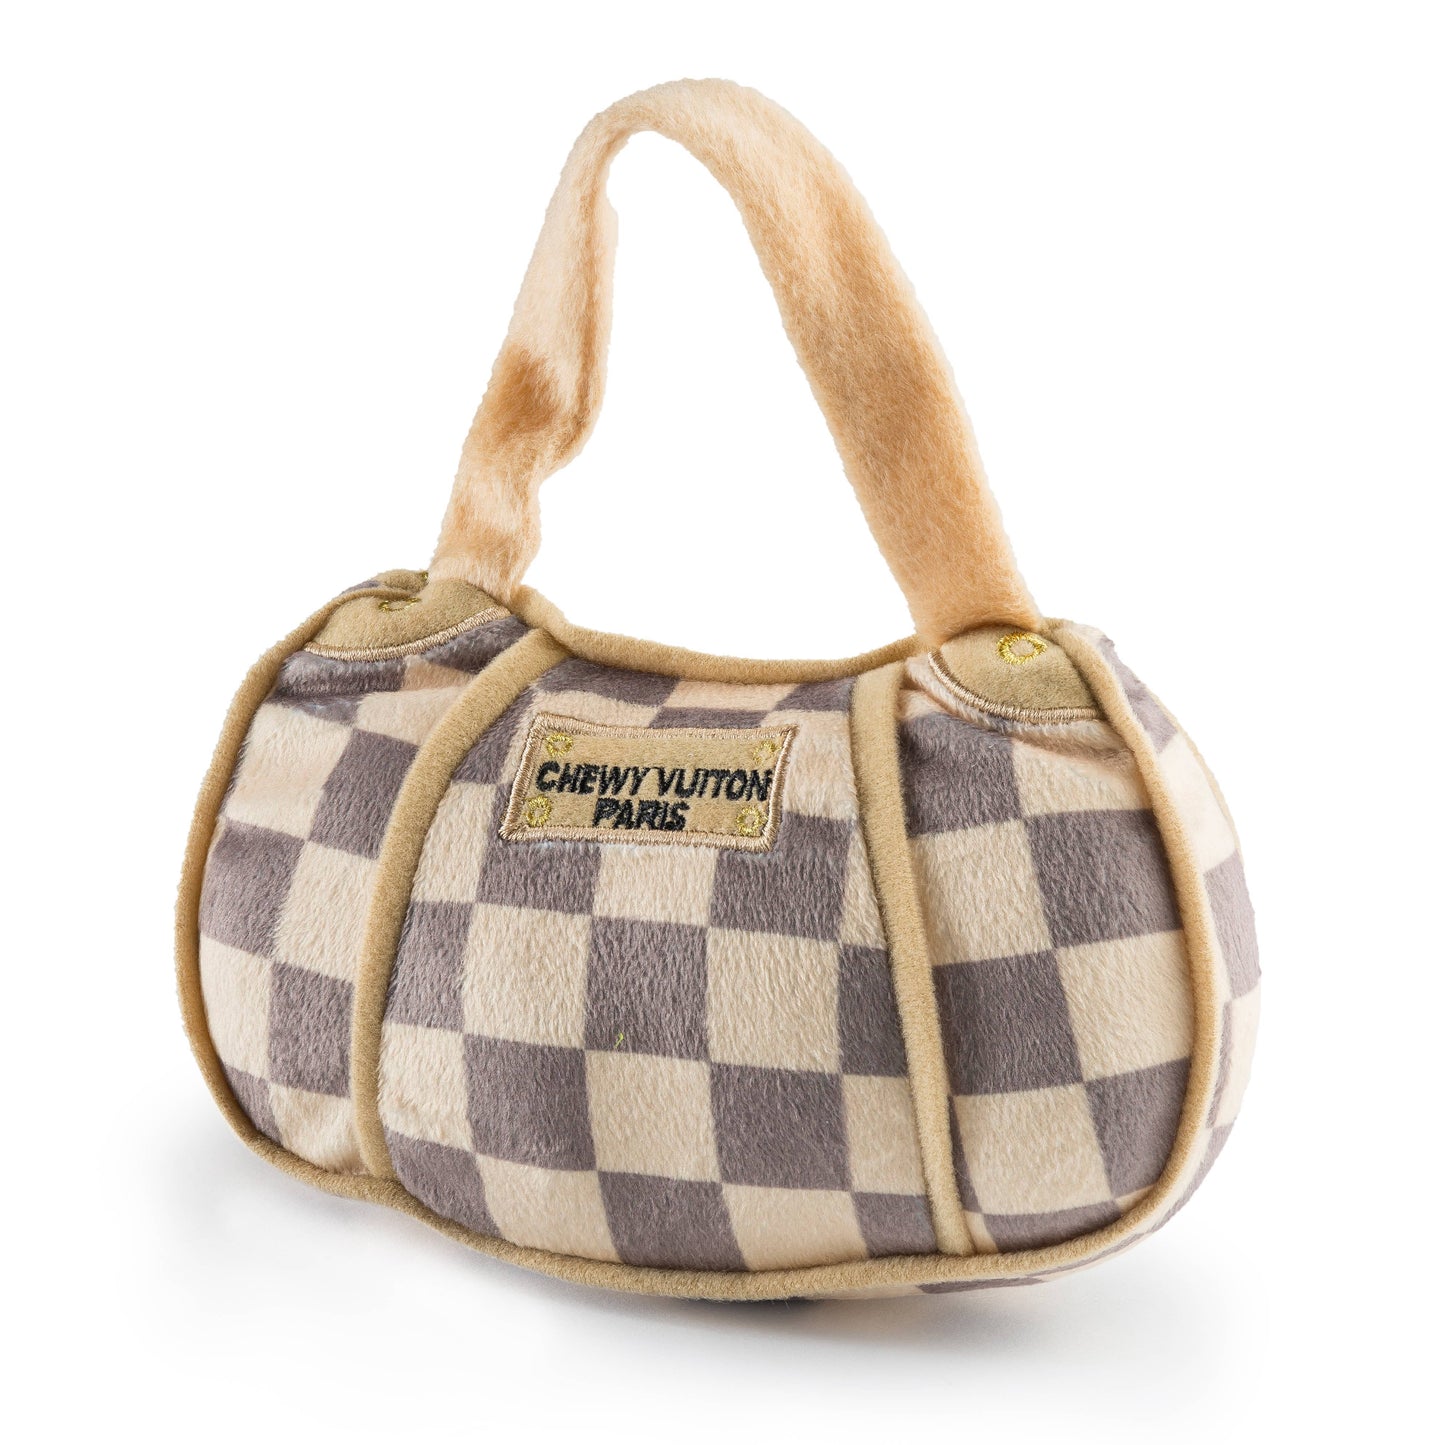 Checker Chewy Vuiton Handbag Dog Toy: Extra Small